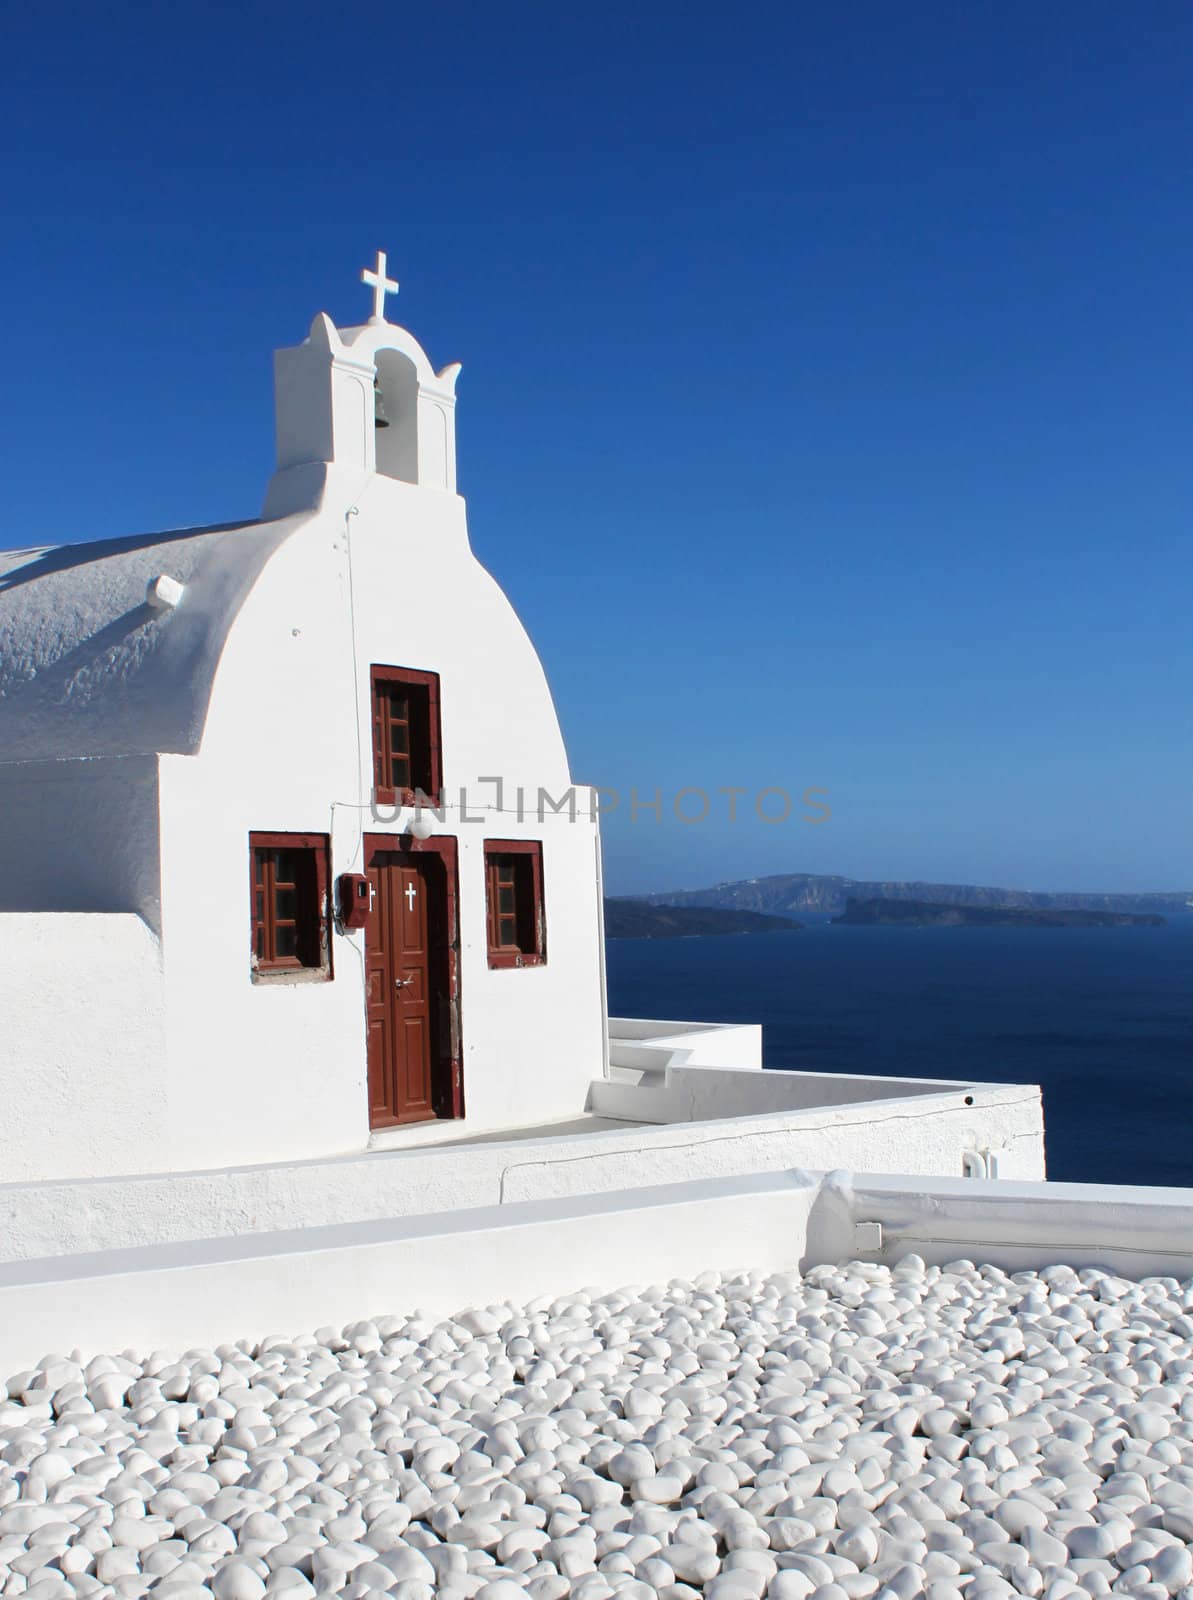 Cycladic church Oia Santorini Greece by anterovium